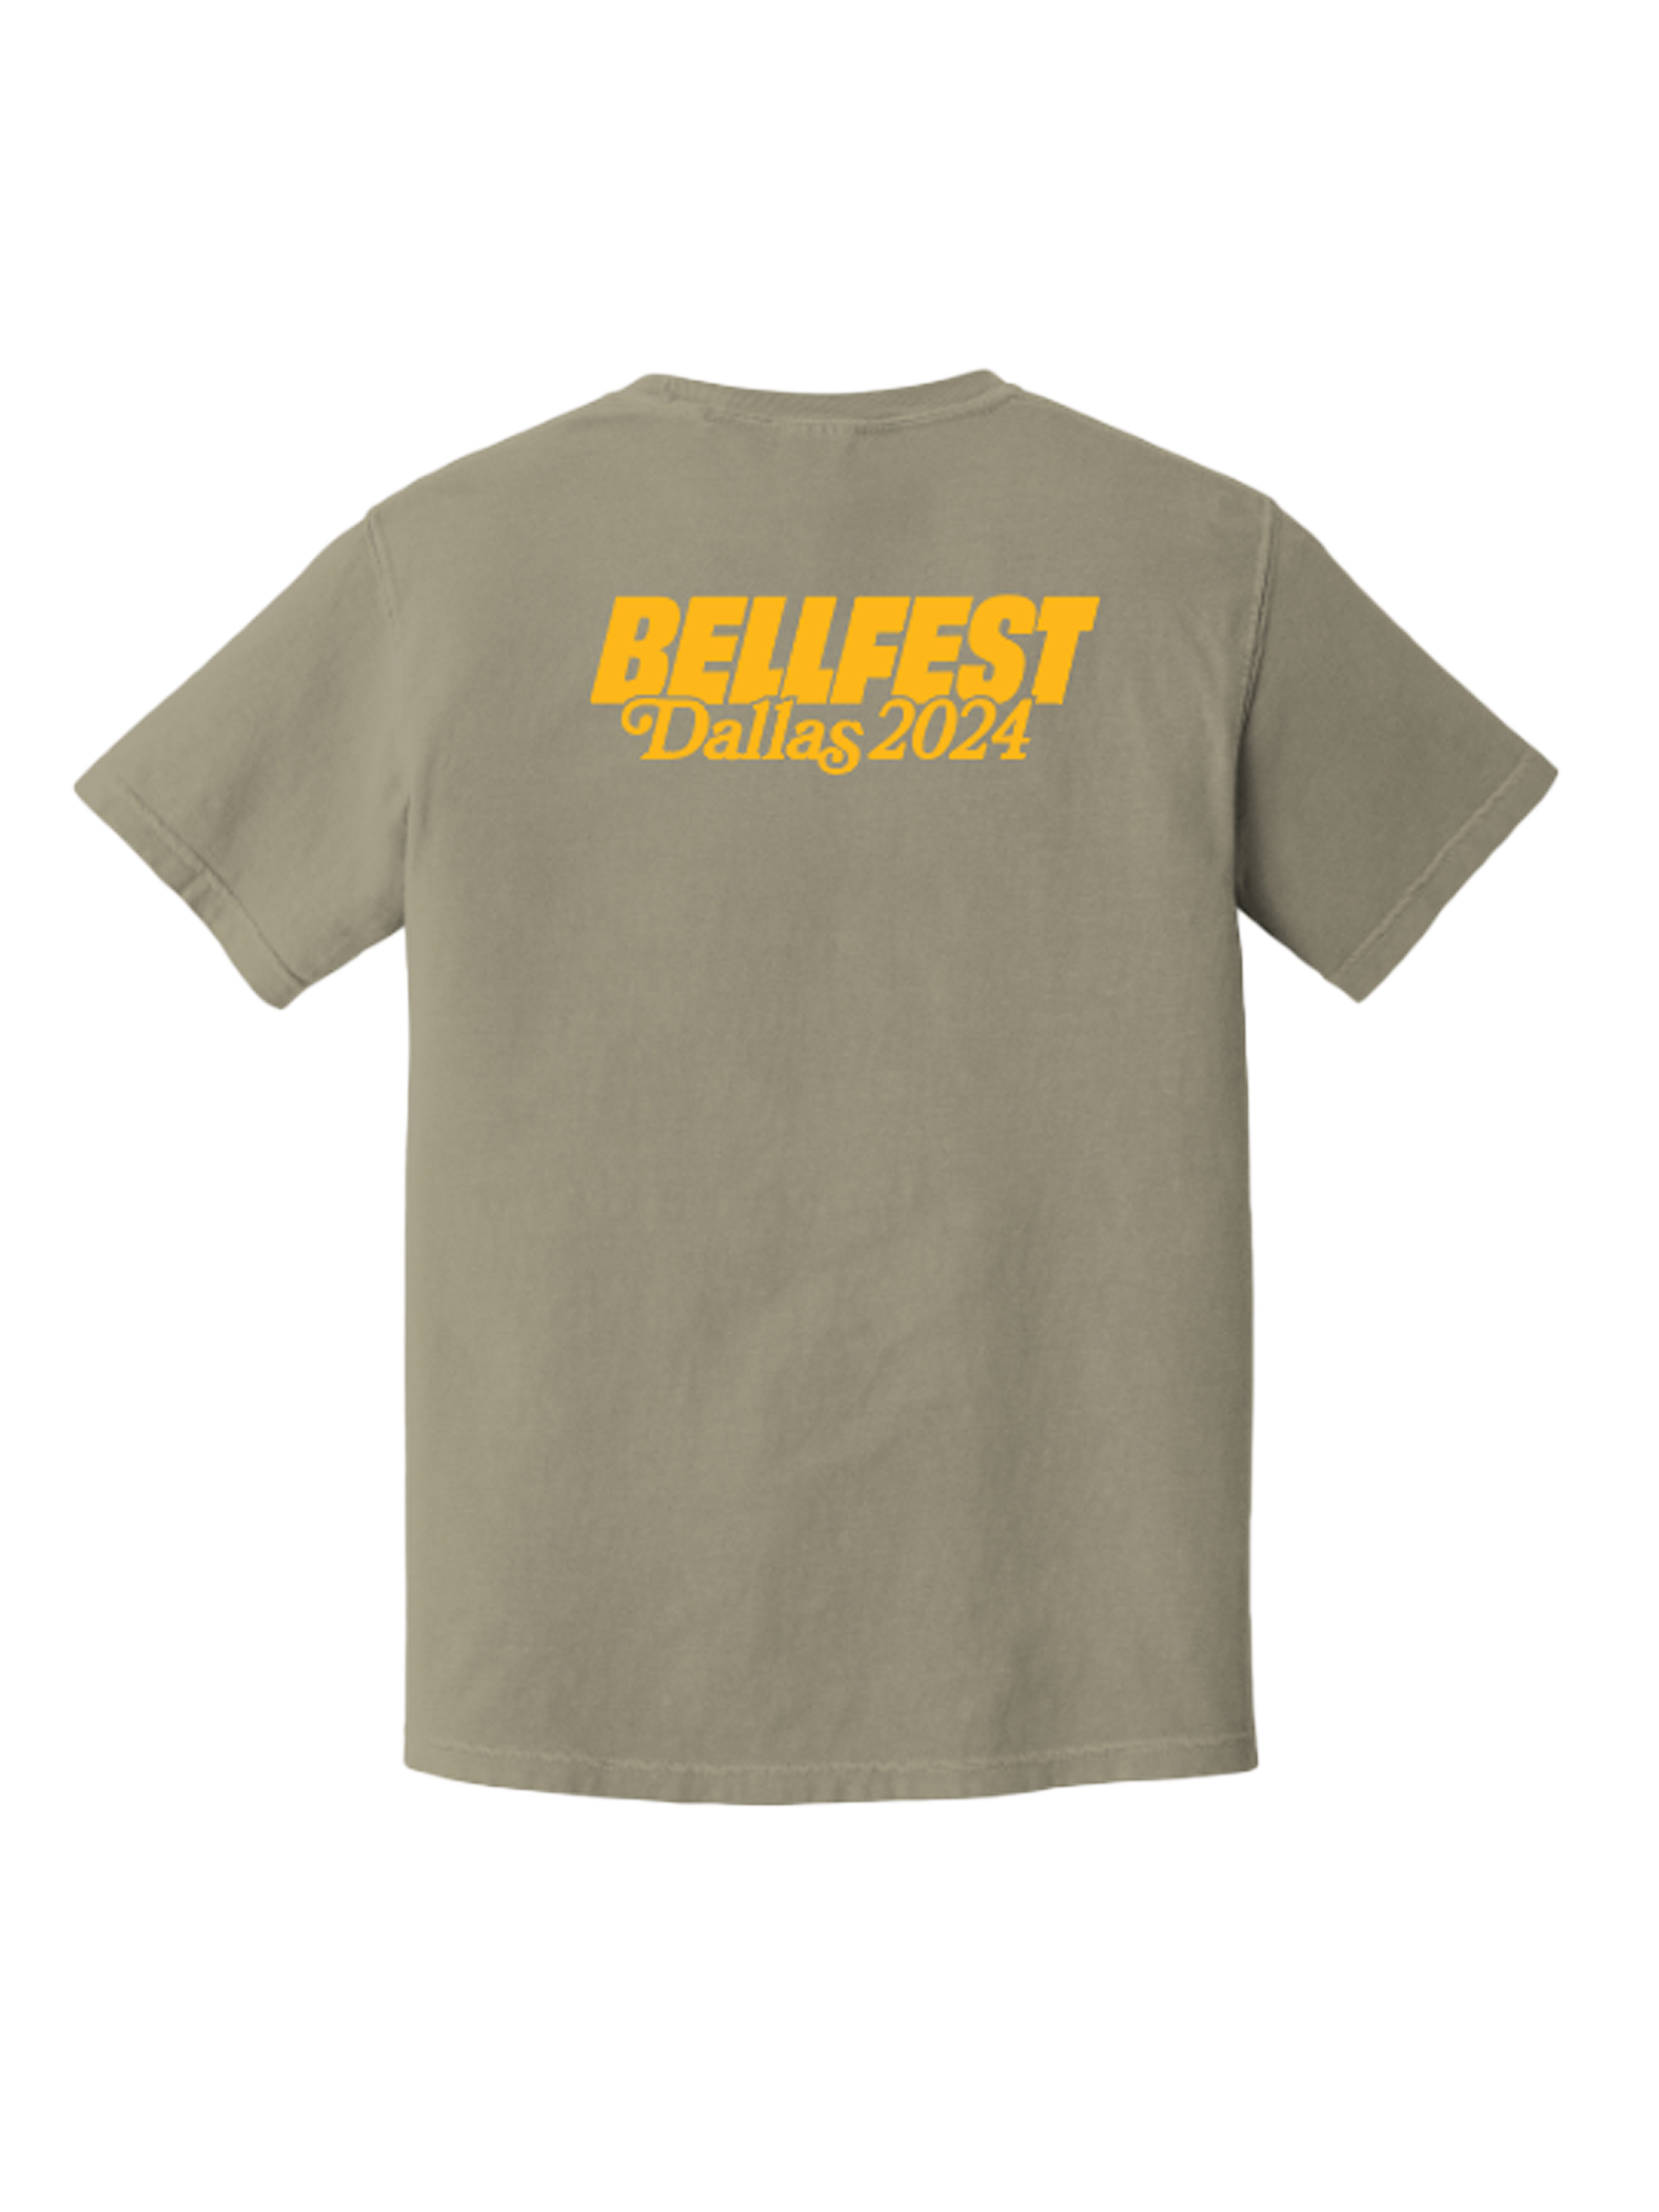 Bellfest Dallas 2024 Comfort Colors T-Shirt - Sandstone